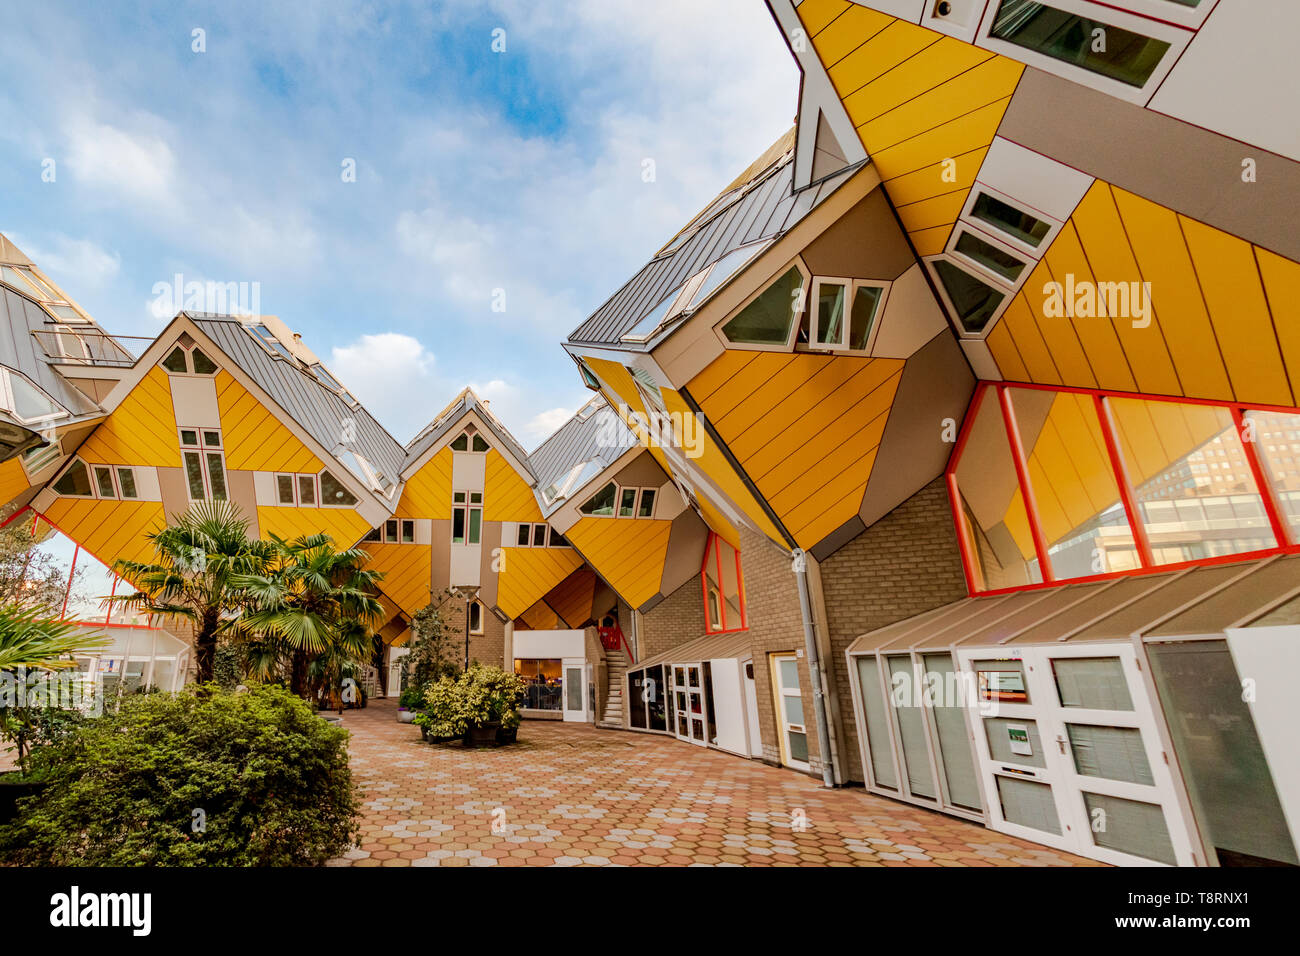 Casas cubo - Kubuswoningen en Rotterdam, Países Bajos - arquitecto Piet Blom - amarillo - Casas de arquitectura moderna - casas modernas - Casa moderna Foto de stock